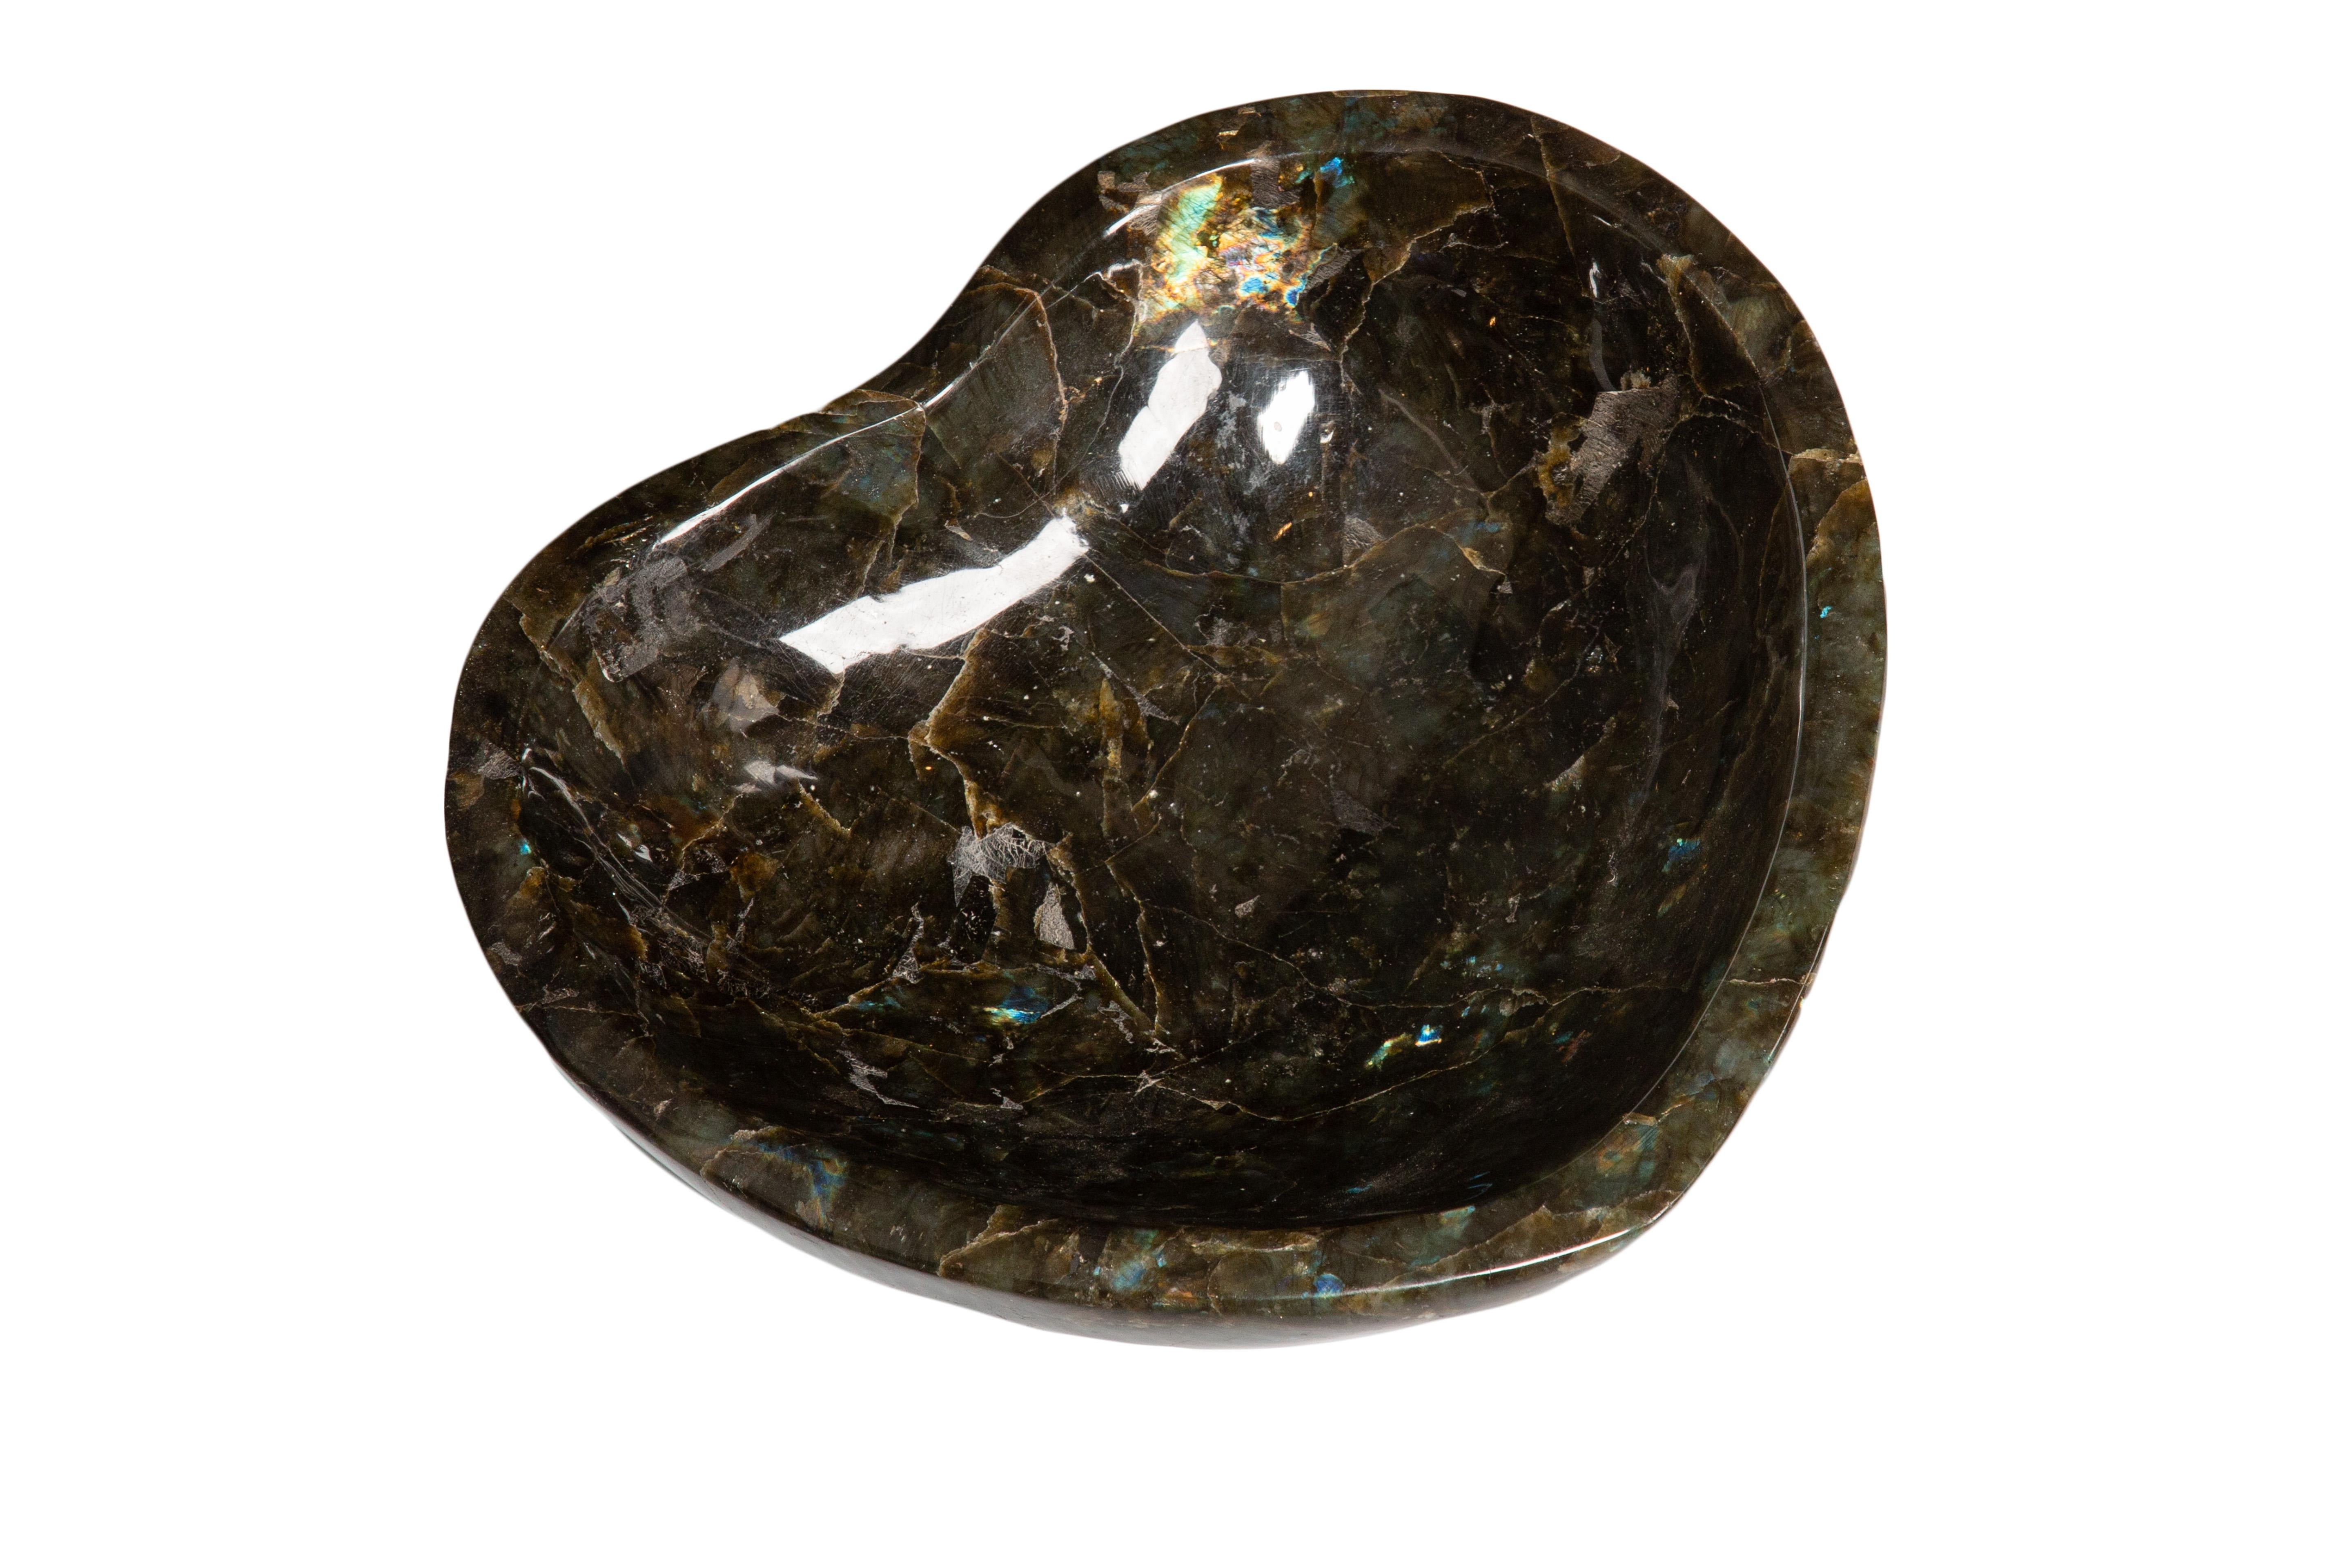 Labradorite heart bowl:

Measures: 10